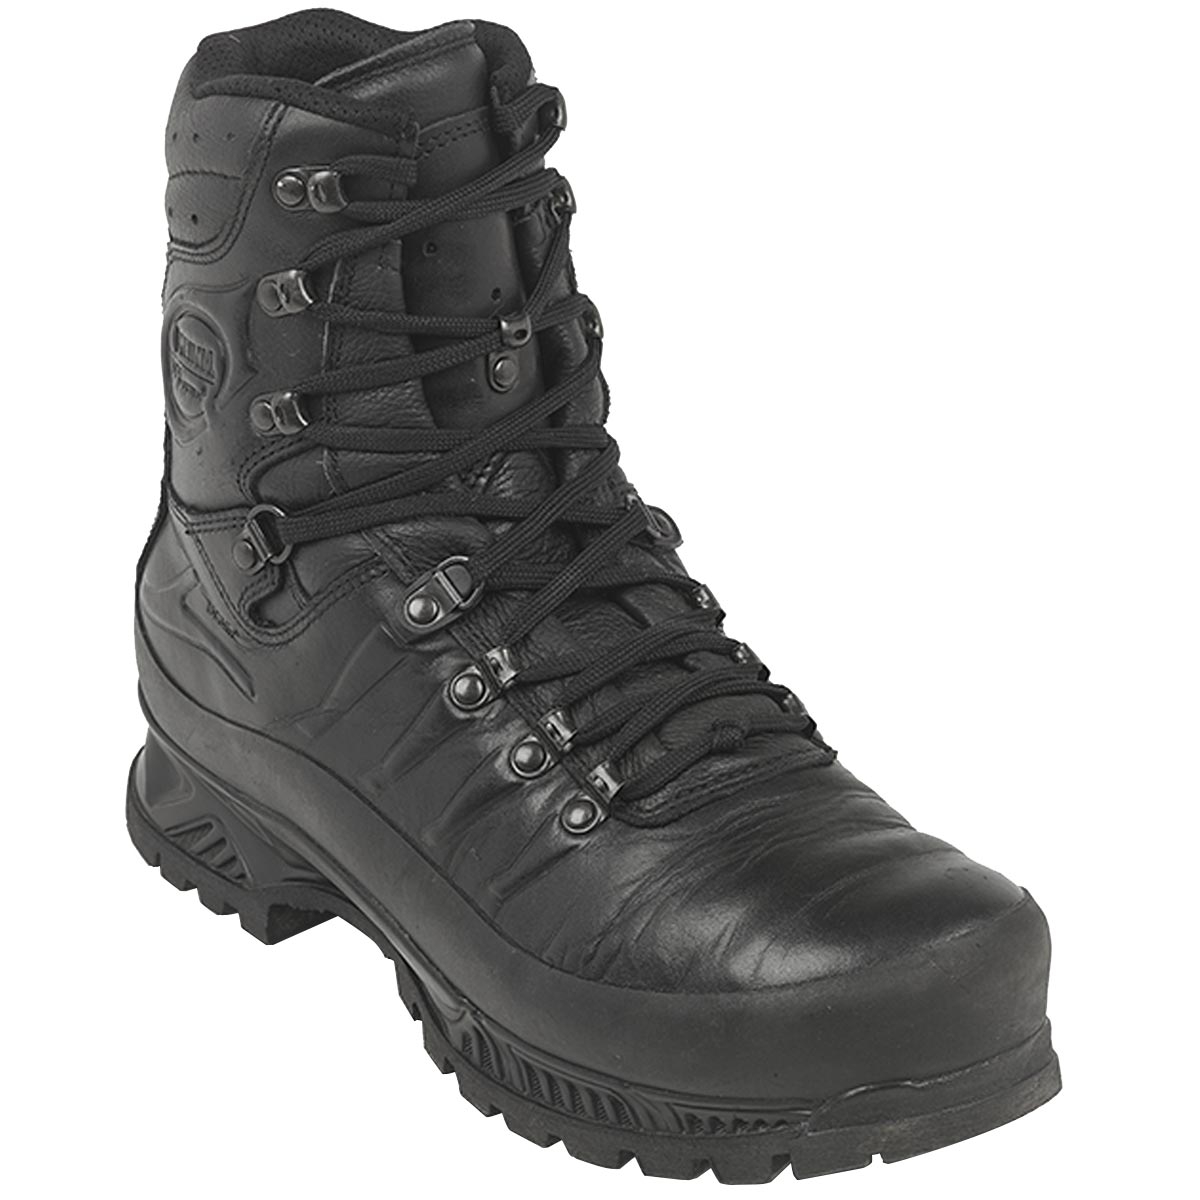 Meindl Waterproof Mountain Boots Black - Grade 1 | Military Kit ...